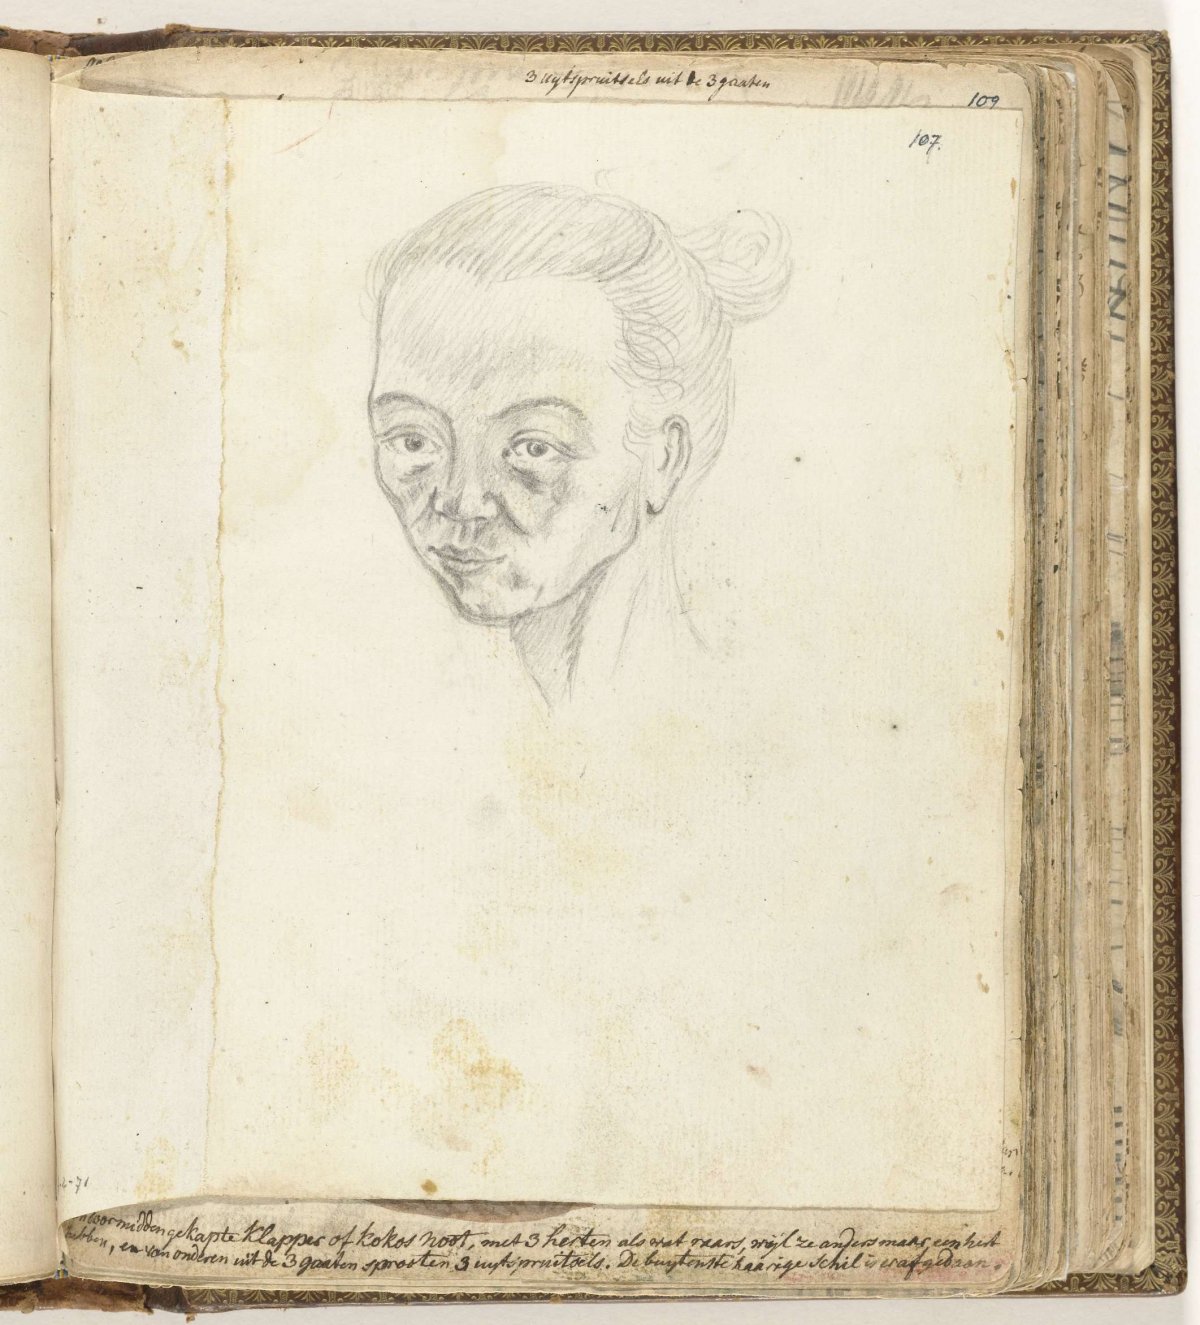 Portrait of an enslaved woman, Jan Brandes, 1779 - 1785